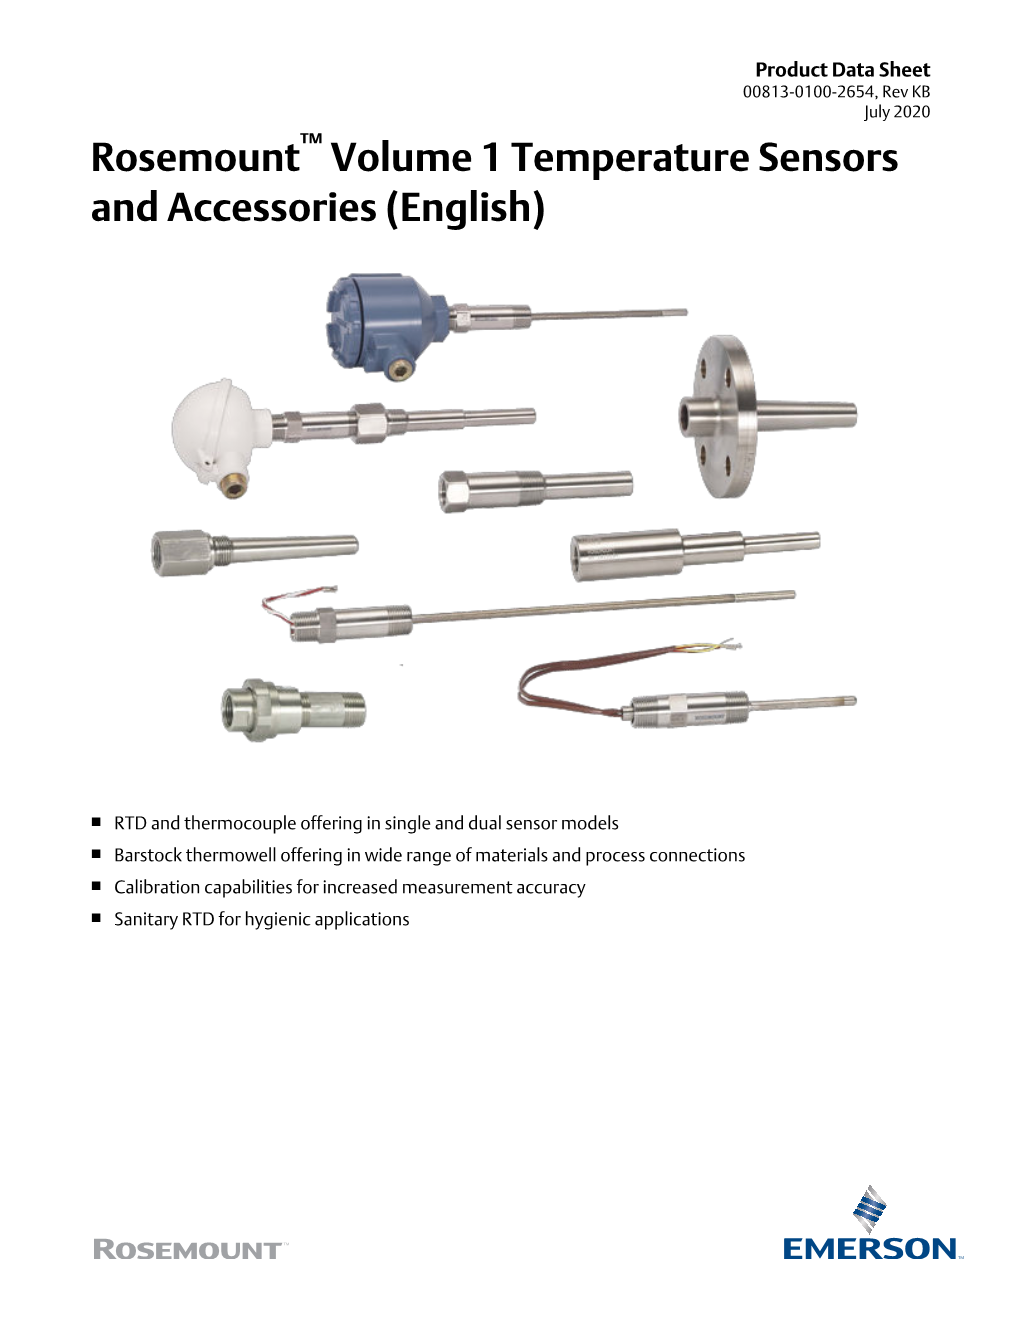 Product Data Sheet: Rosemount Volume 1 Temperature Sensors and Accessories (English)